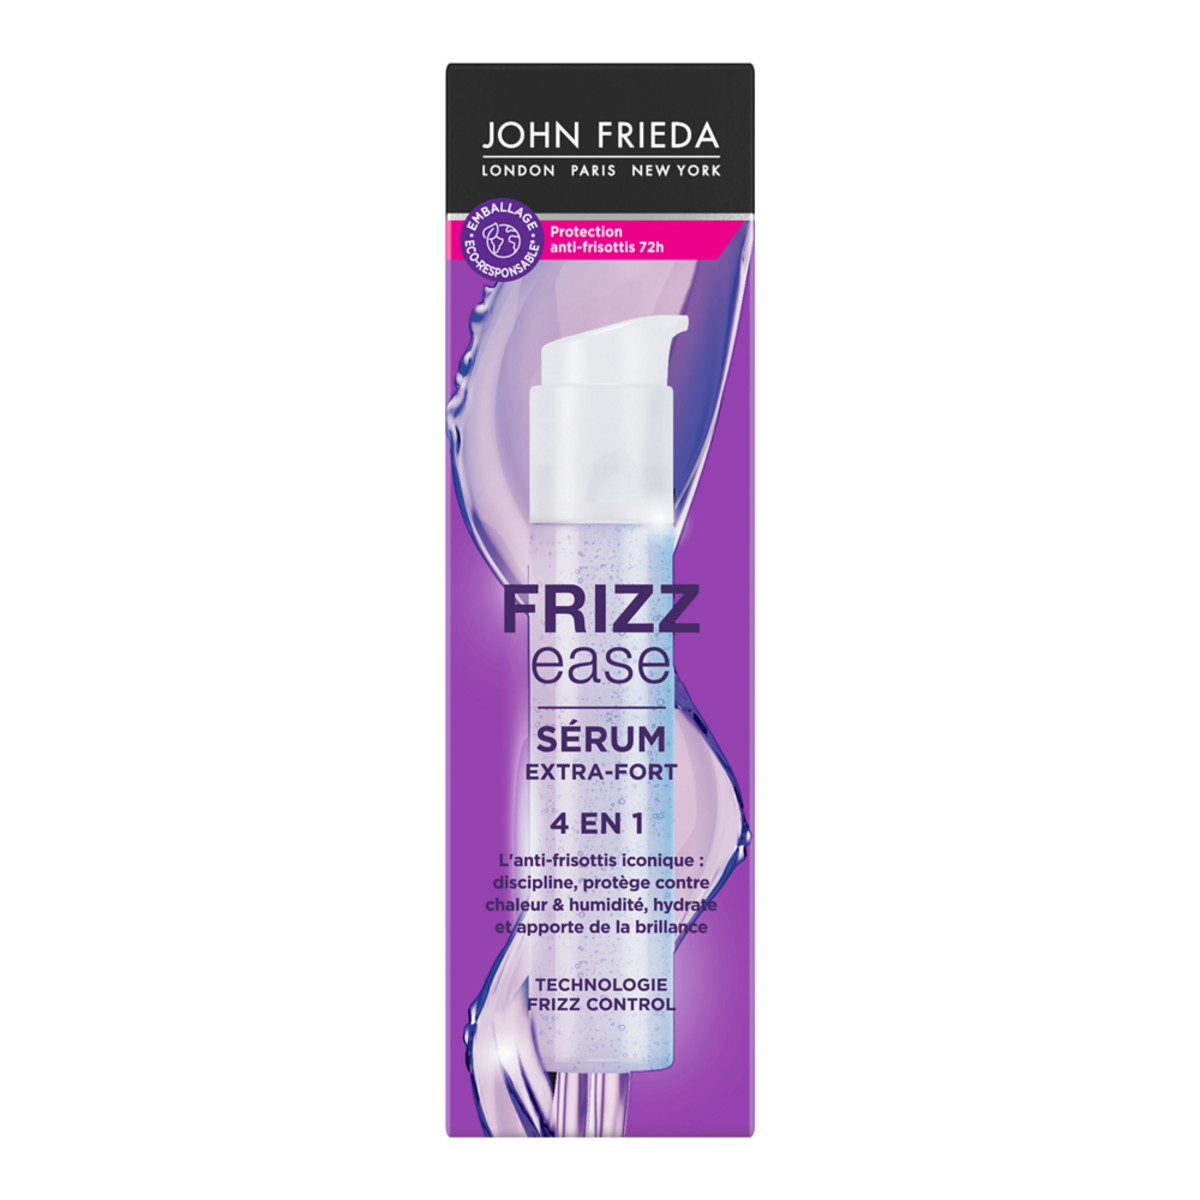 JOHN FRIEDA Frizz ease Sérum extra fort 4en1 anti-frisottis 72h 50ml